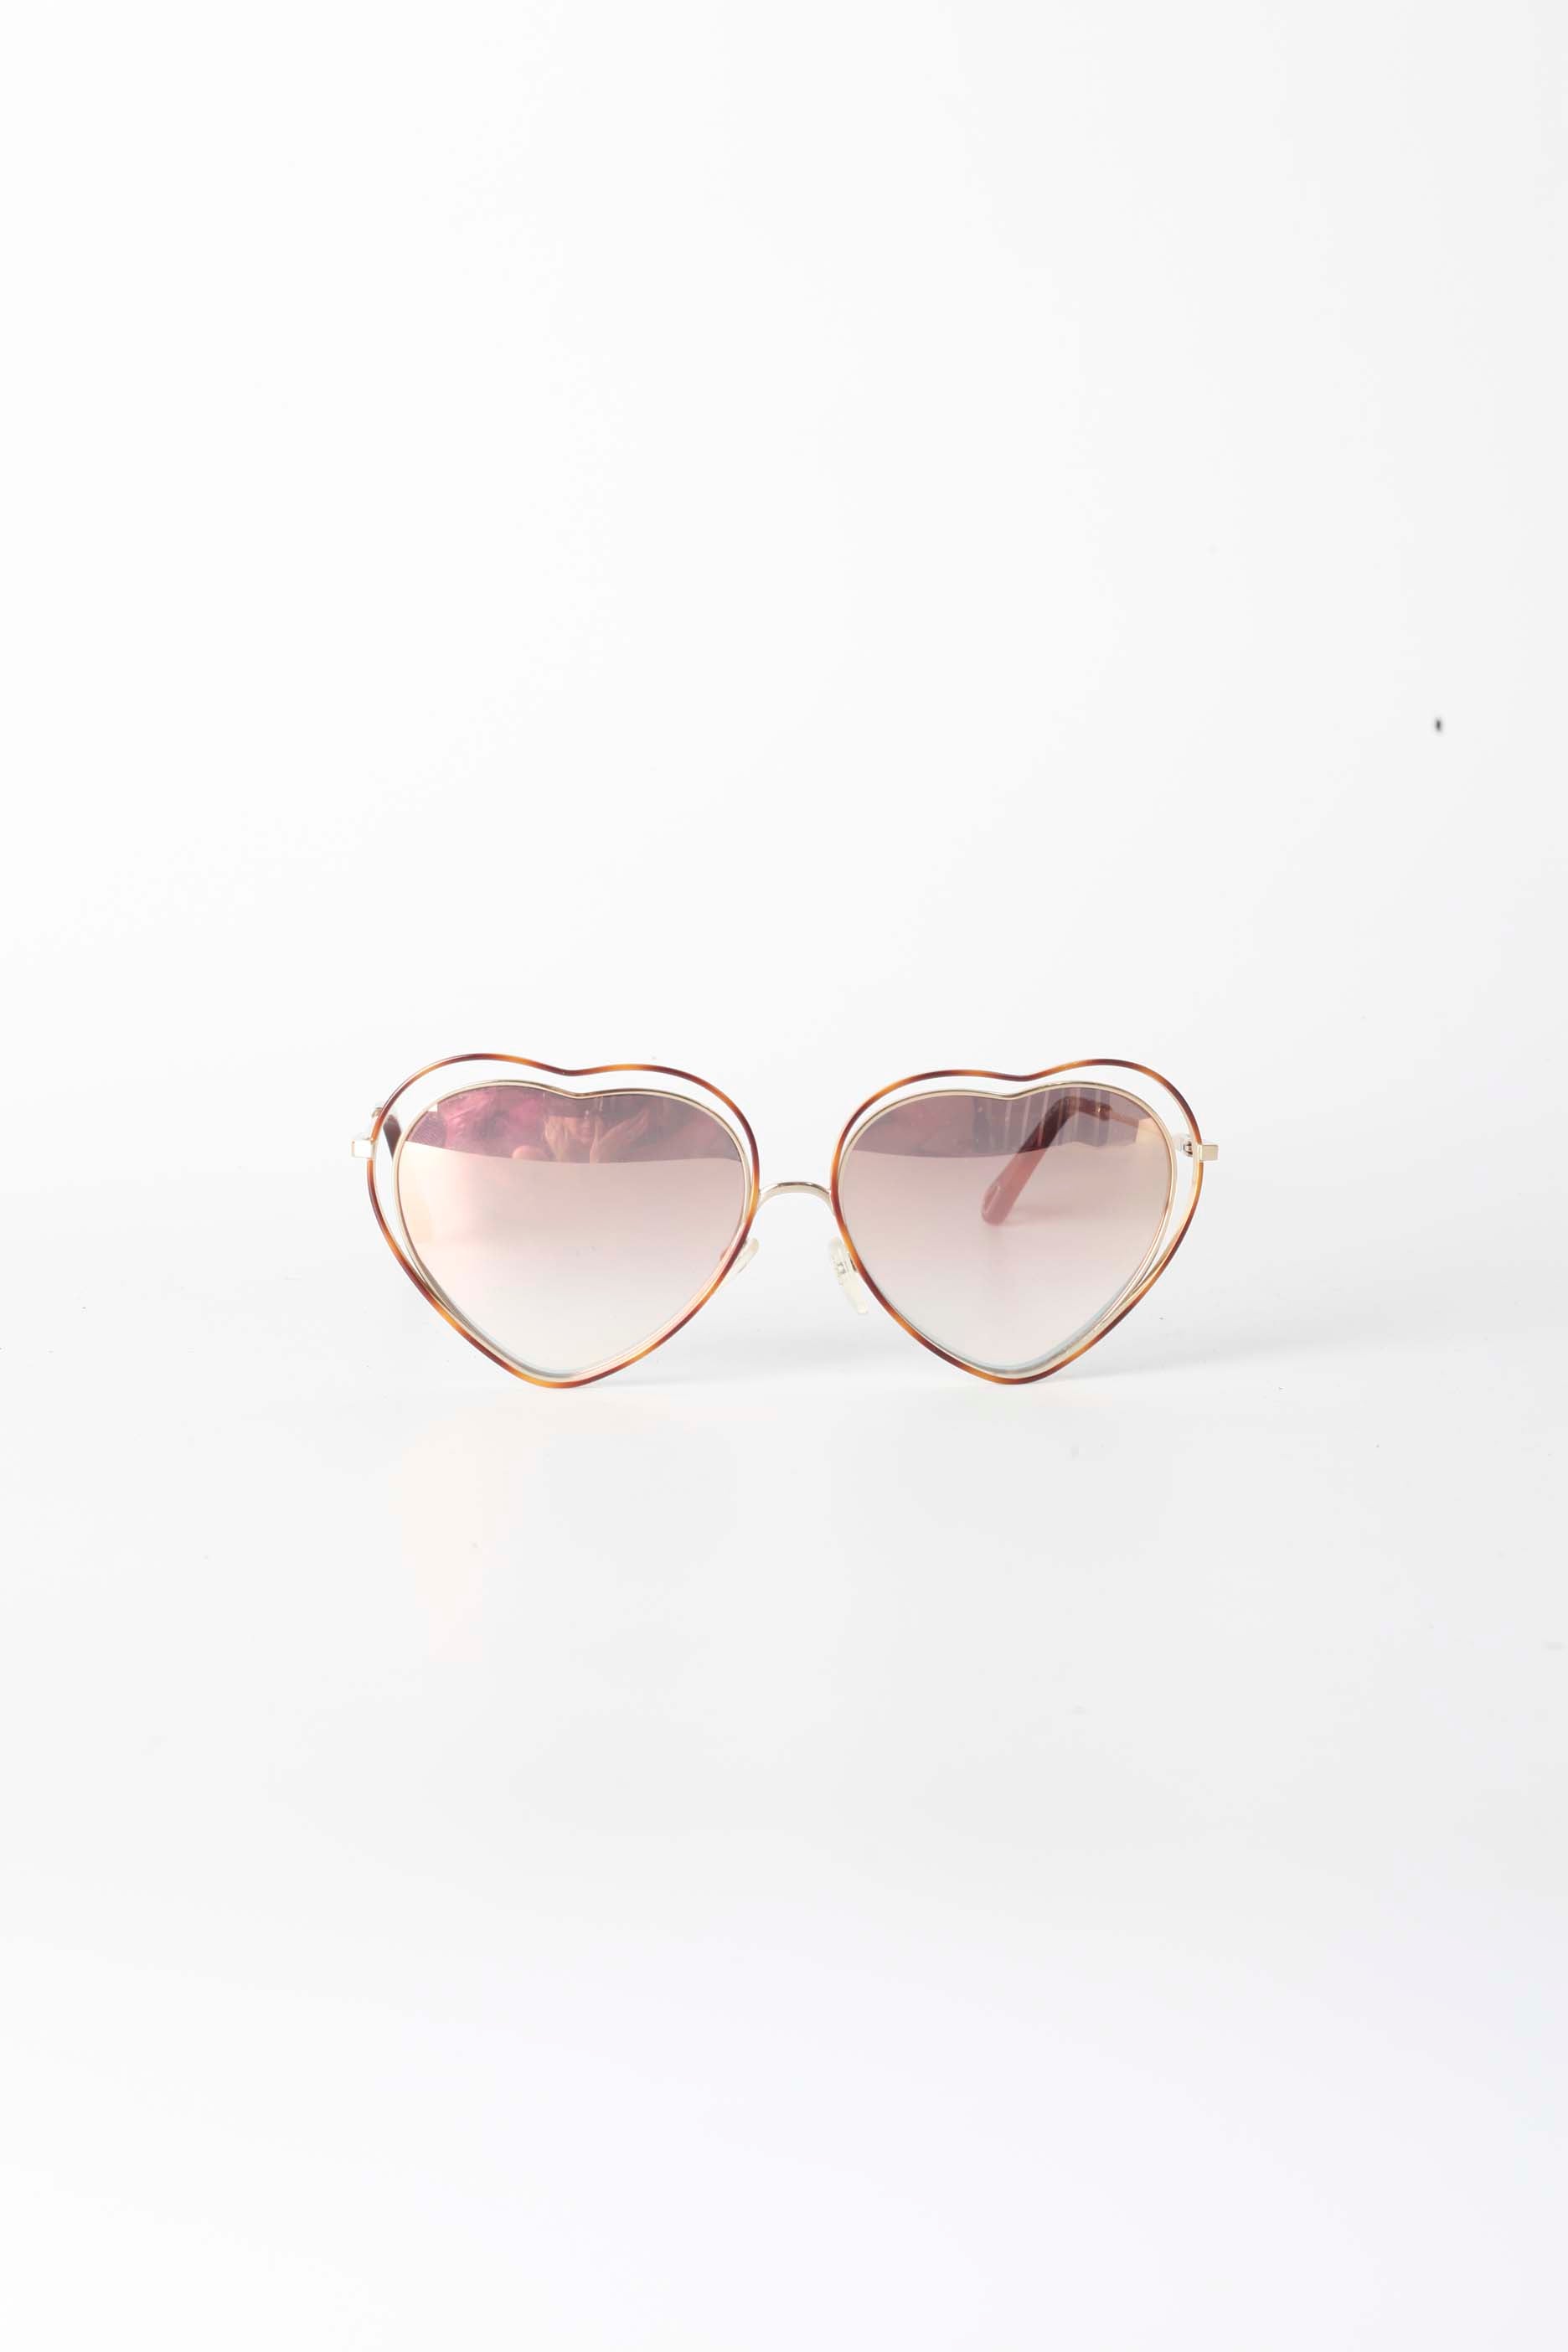 Chloé Rose Gold Heart Sunglasses